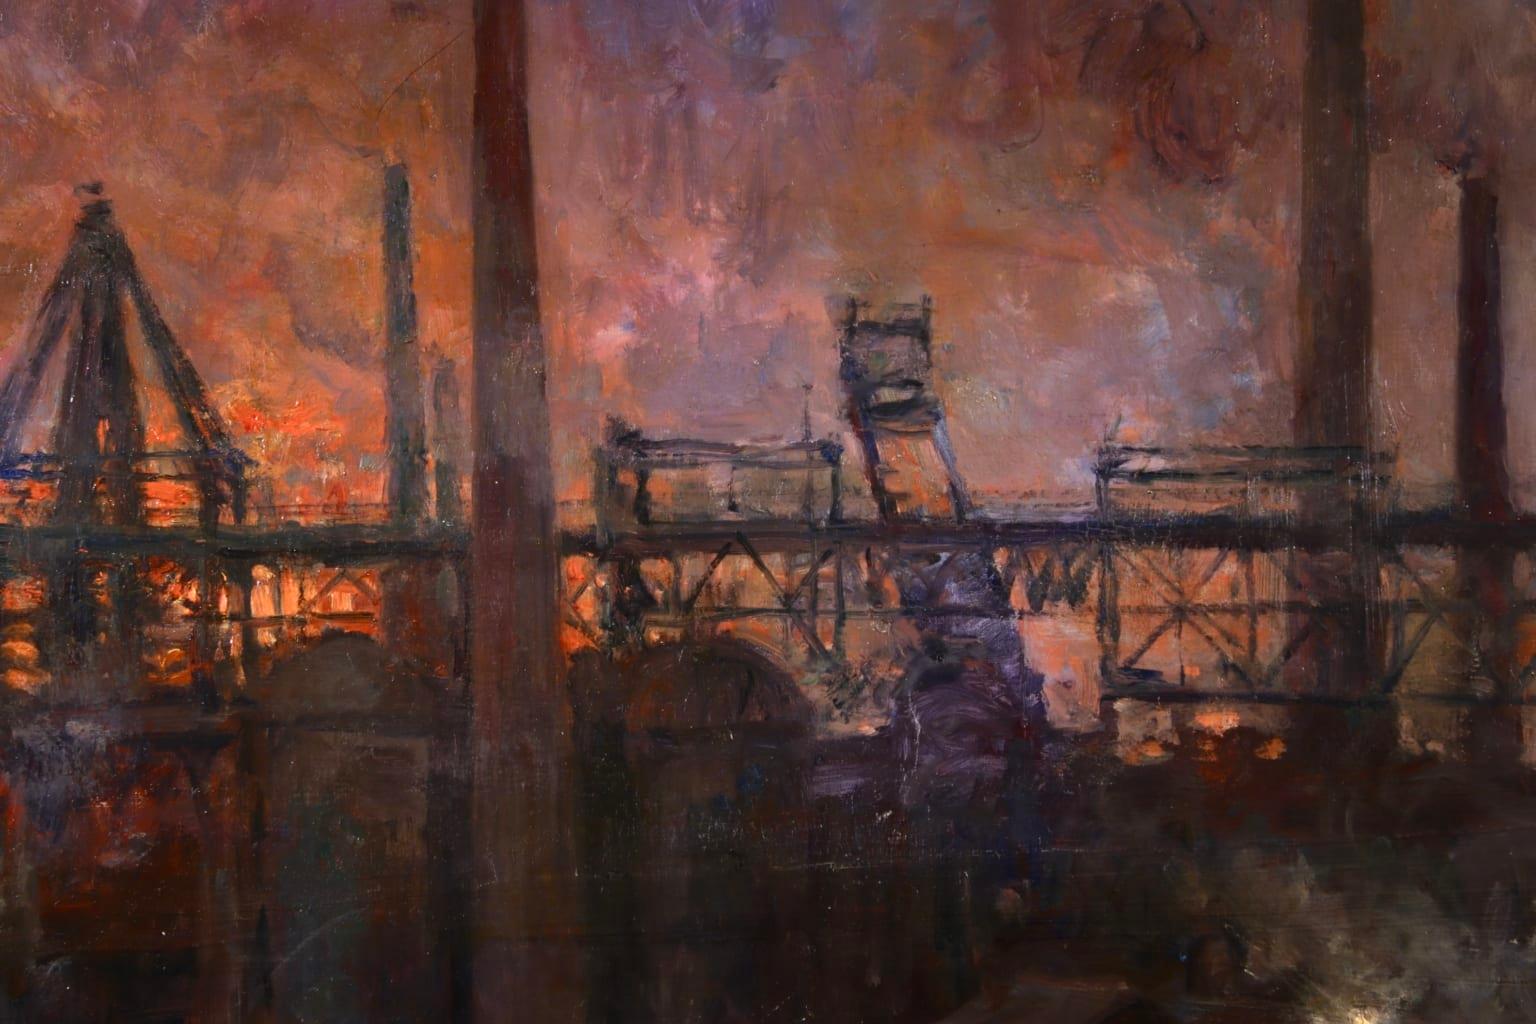 Blast Furnaces - Night - Realist Oil, Industrial Cityscape by Oswald Poreau 1